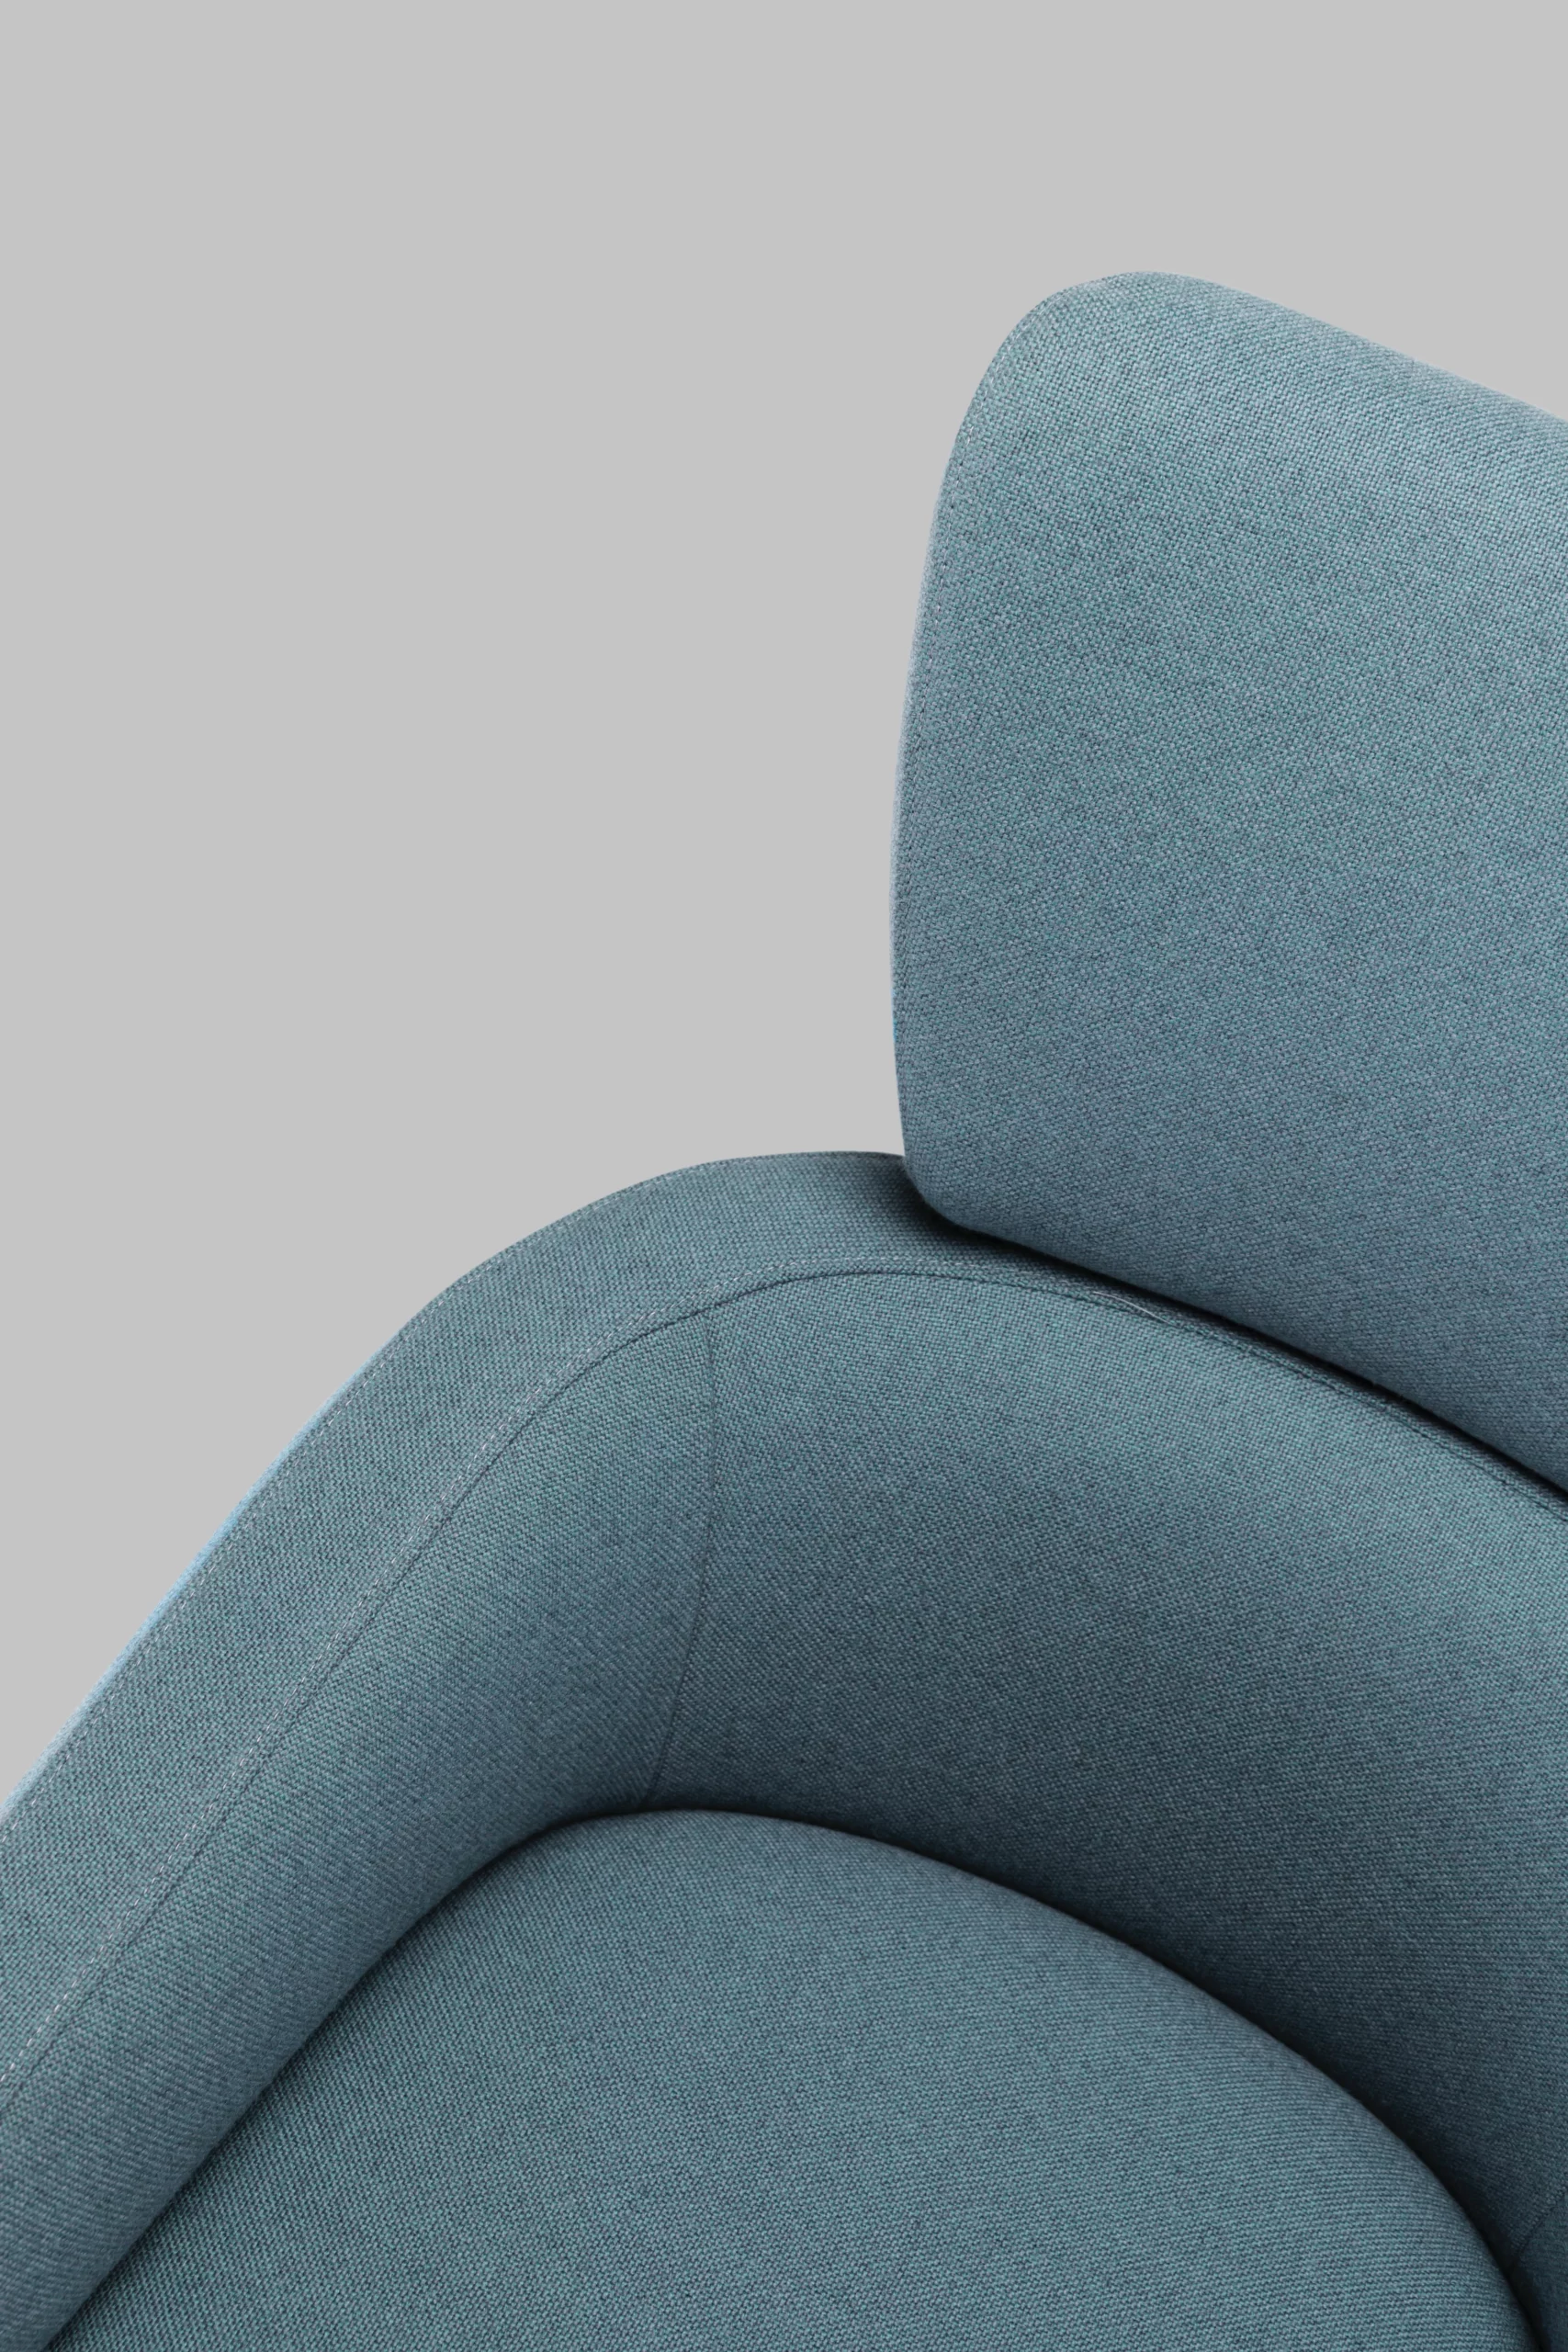 Harvink fauteuil Clip blauw detail